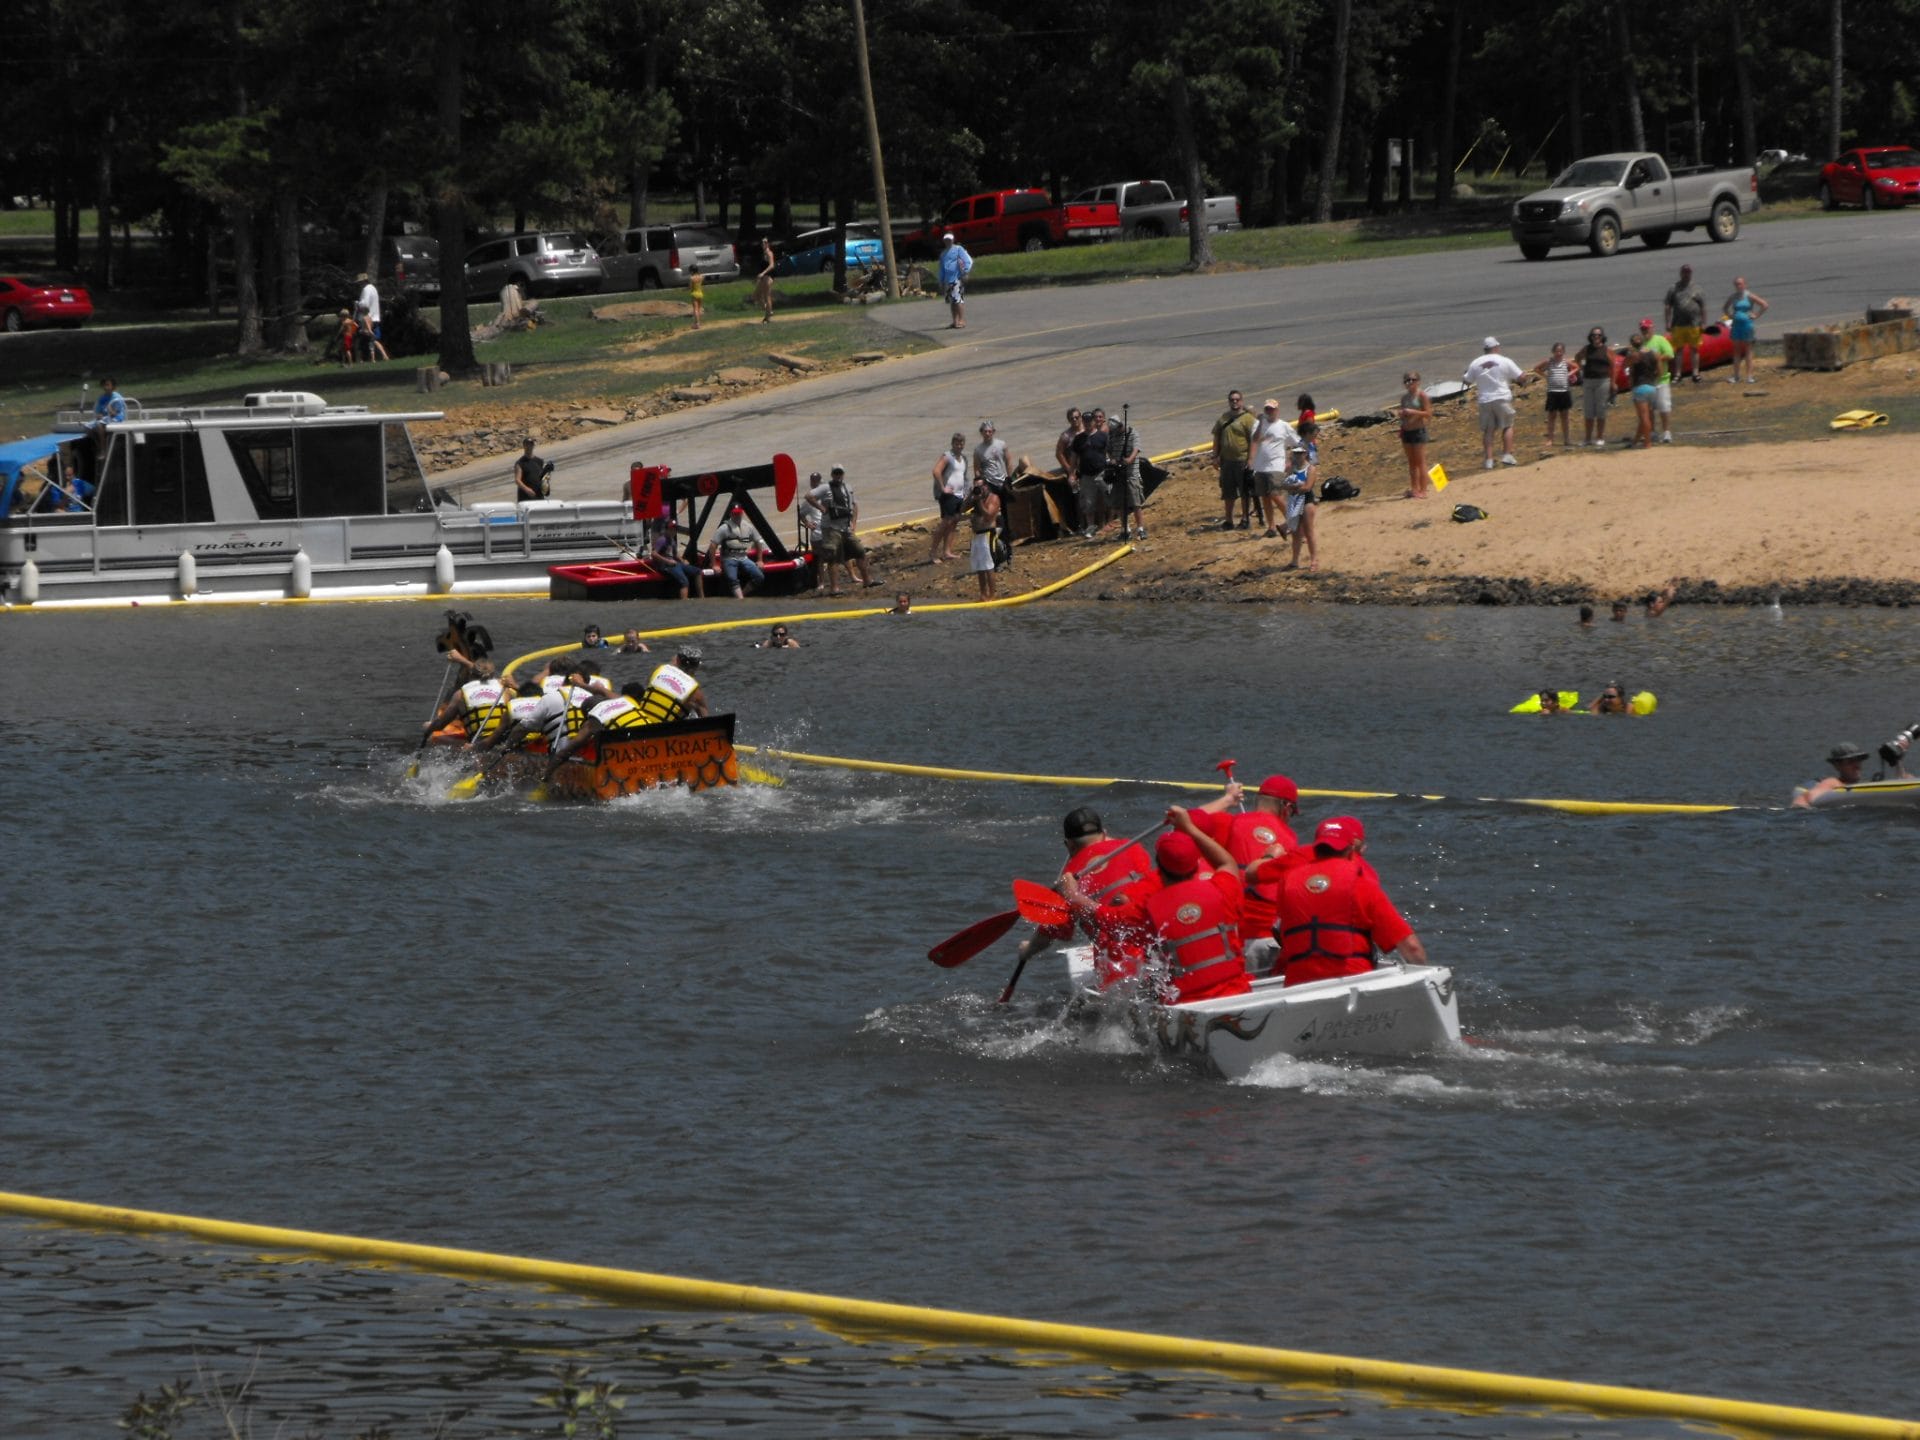 Cardboard Boat Race in Action